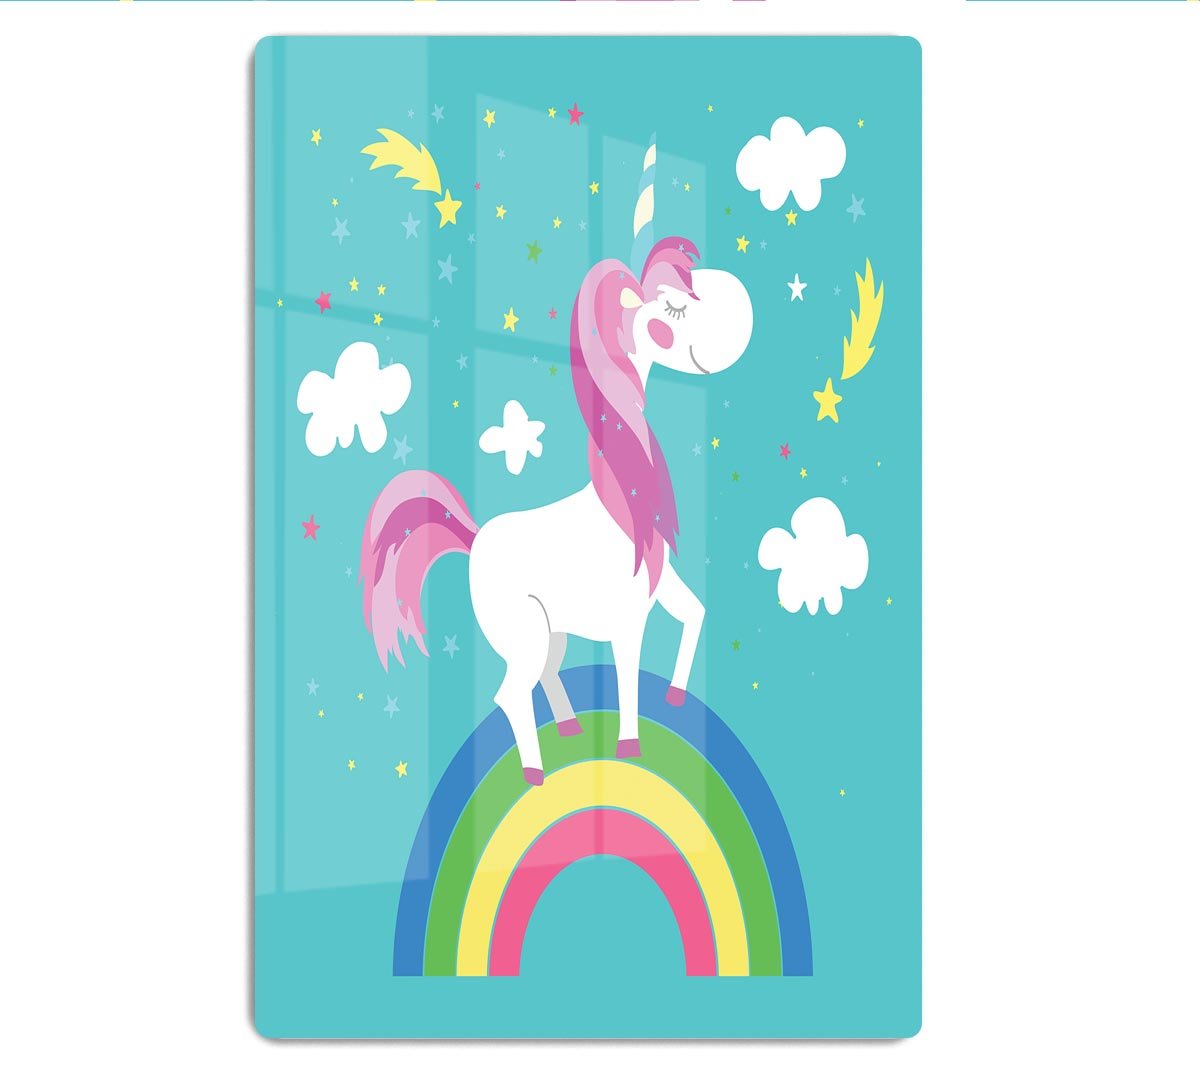 Fairy unicorn with rainbow HD Metal Print